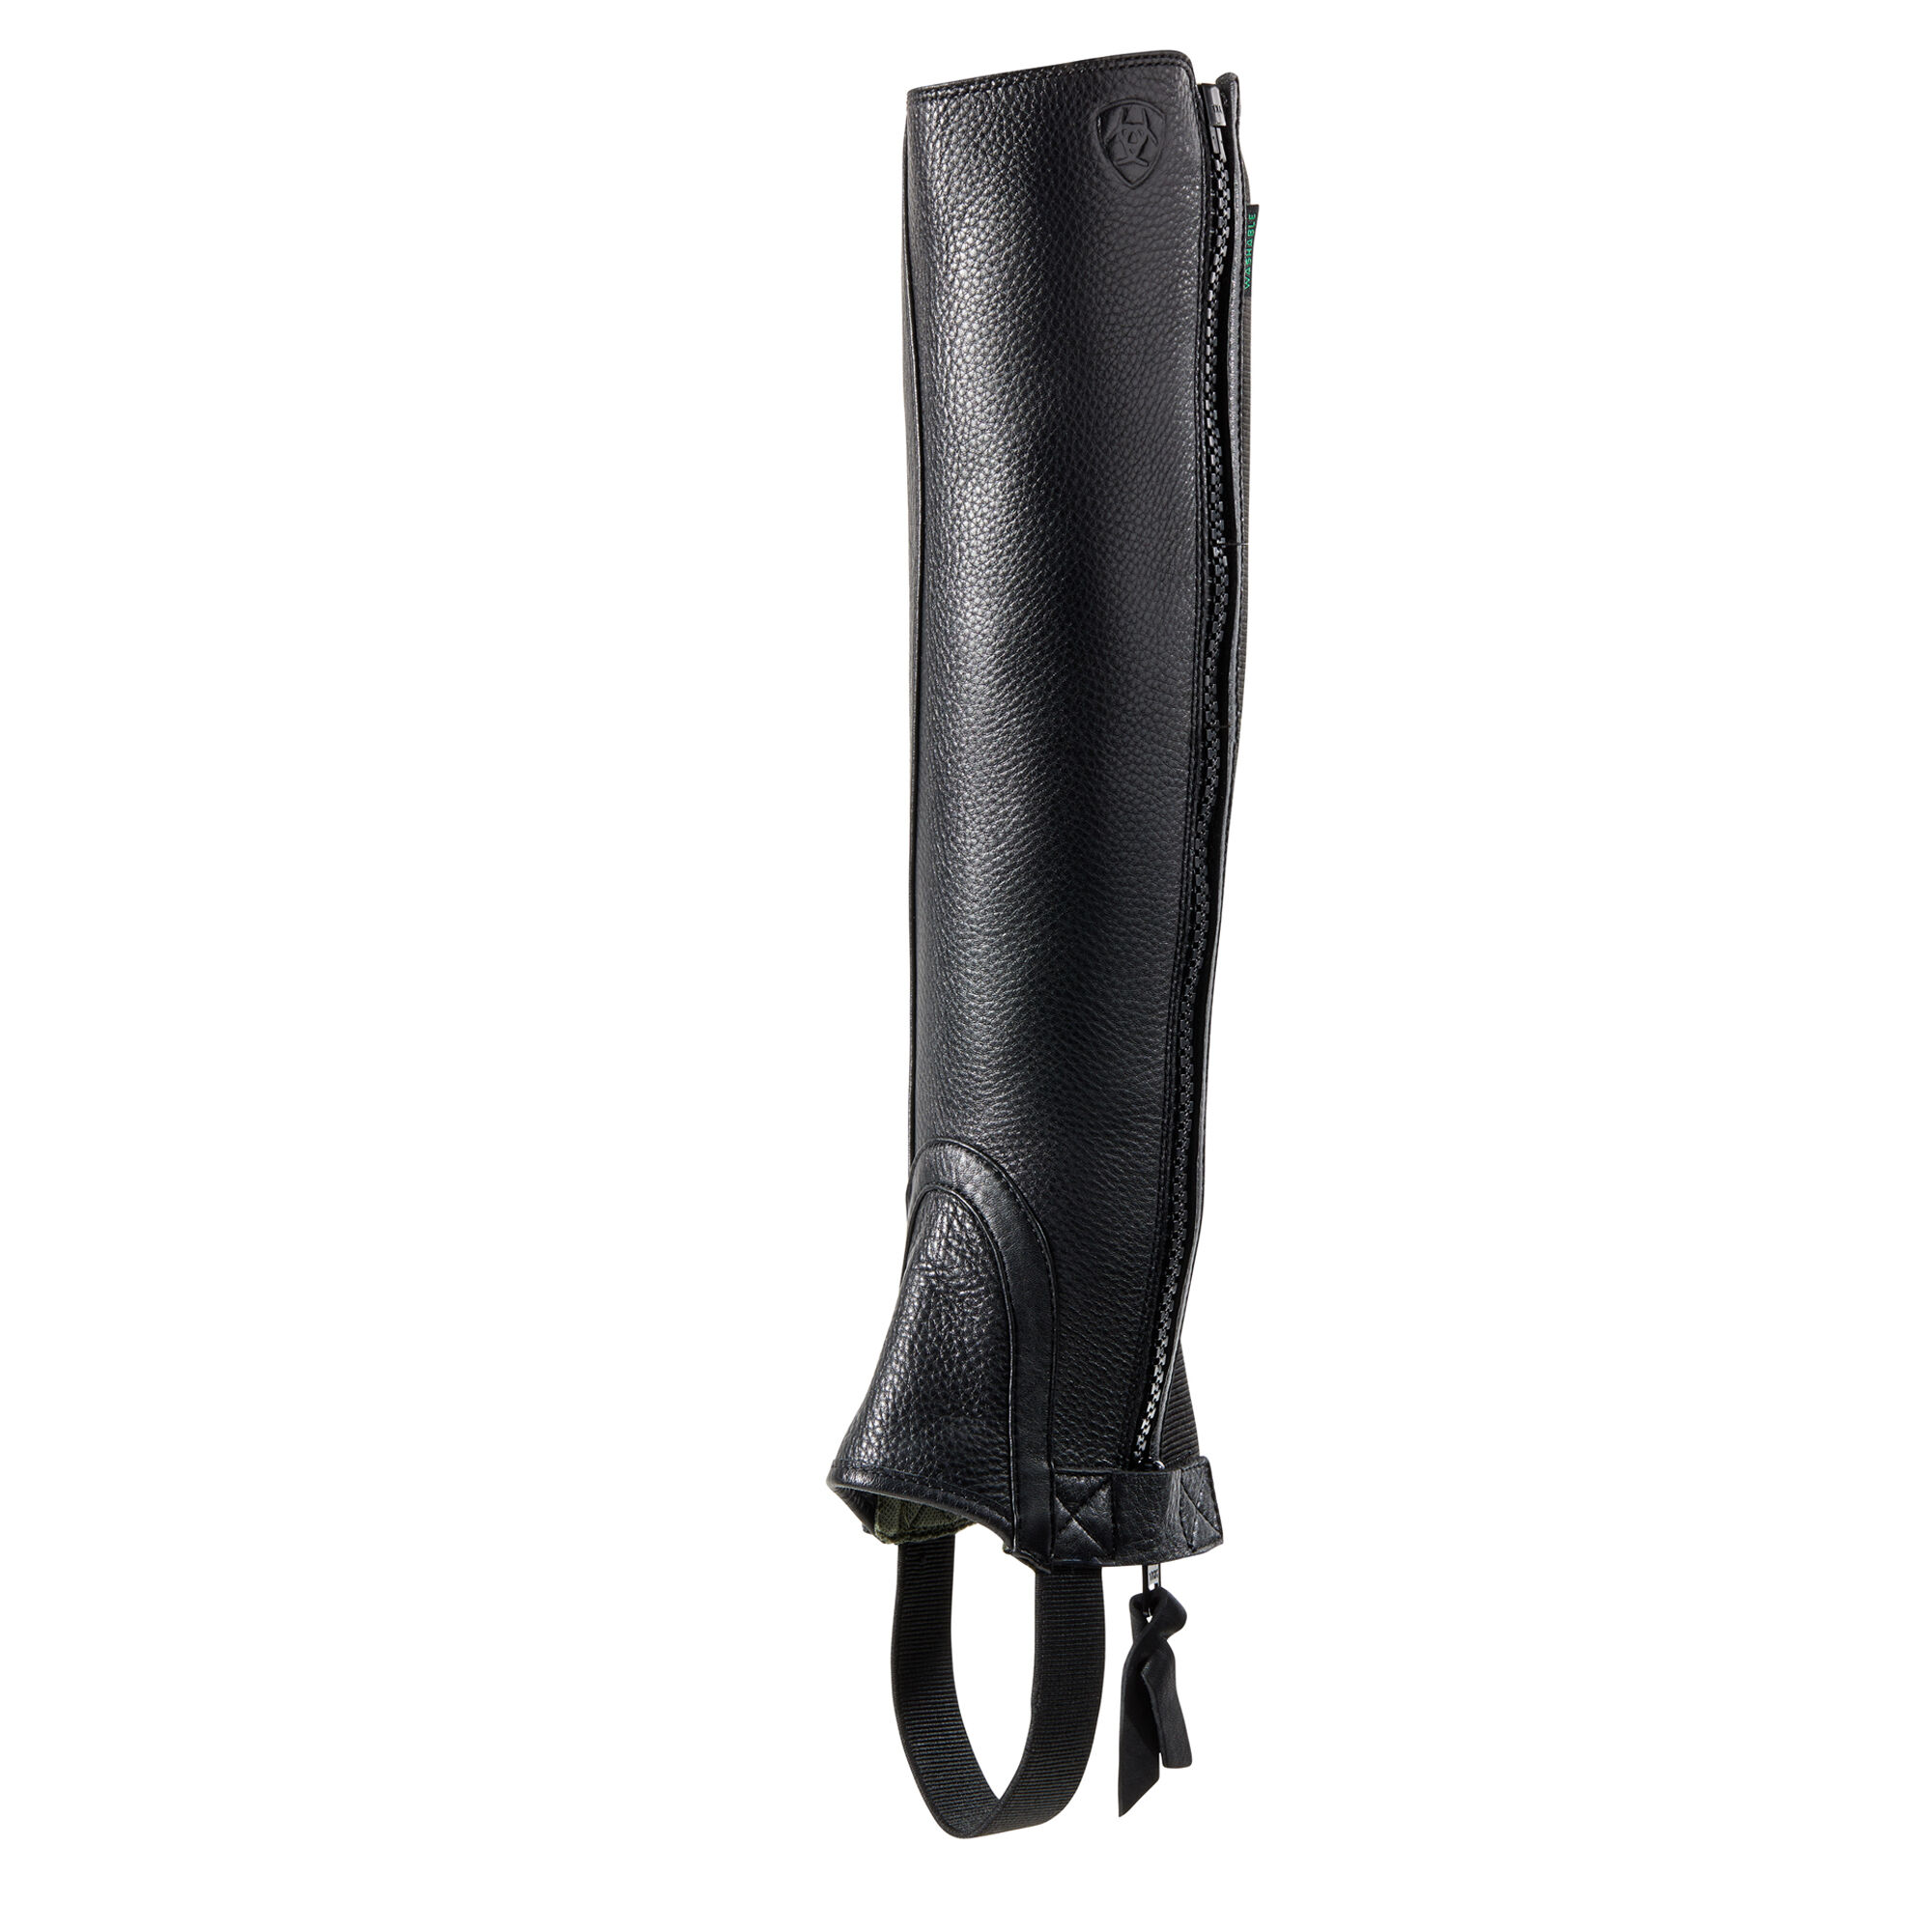 New Ariat Volant Fusion Leather Half Chaps Chap Black Medium Tall M 49.5 39.5 cm 